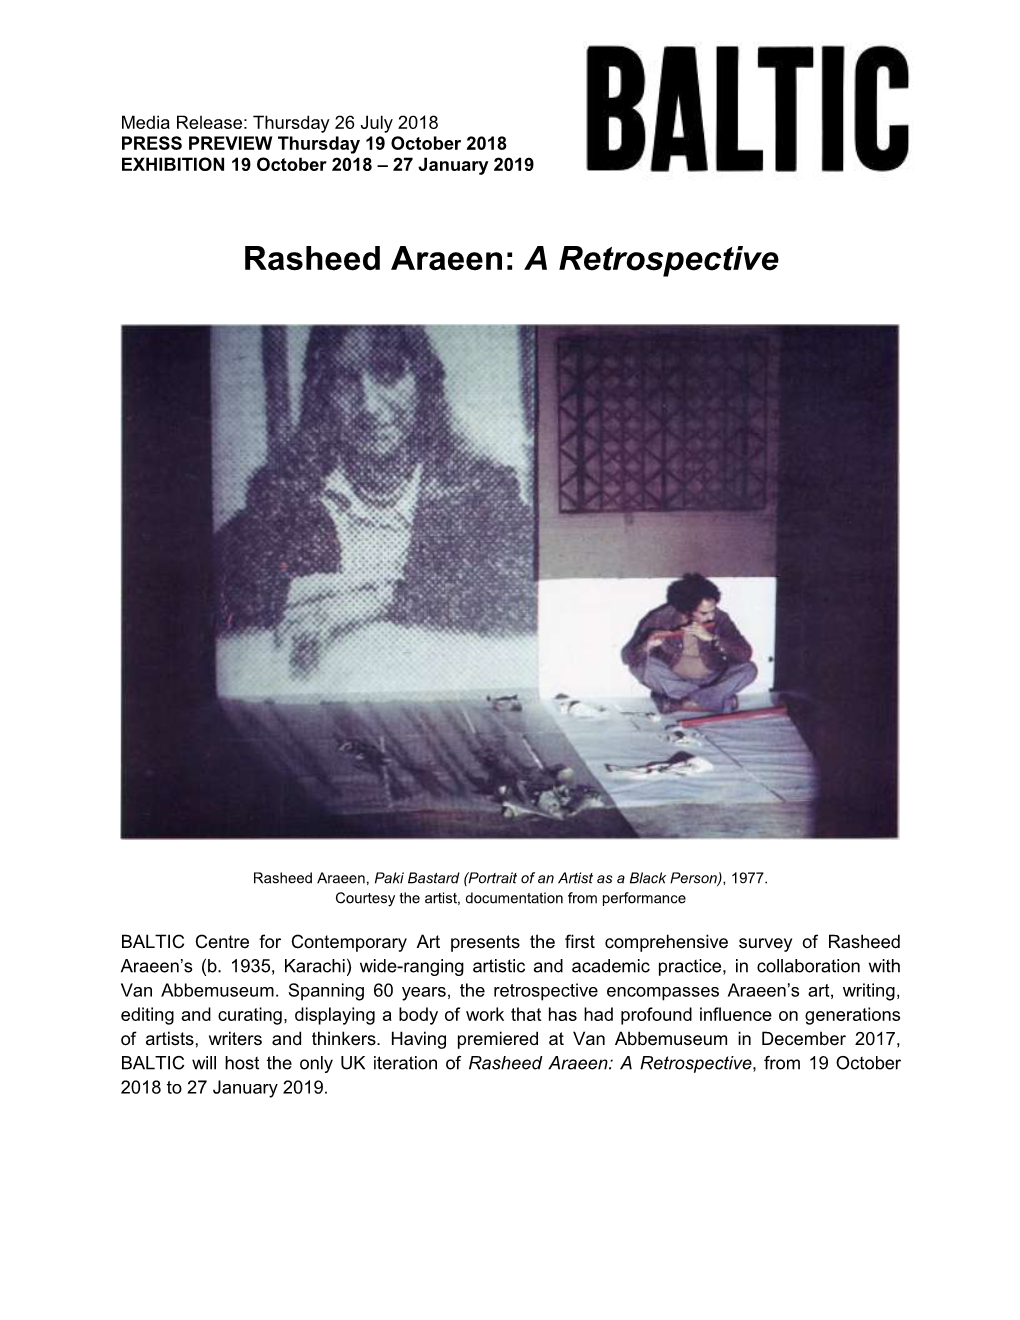 Rasheed Araeen: a Retrospective